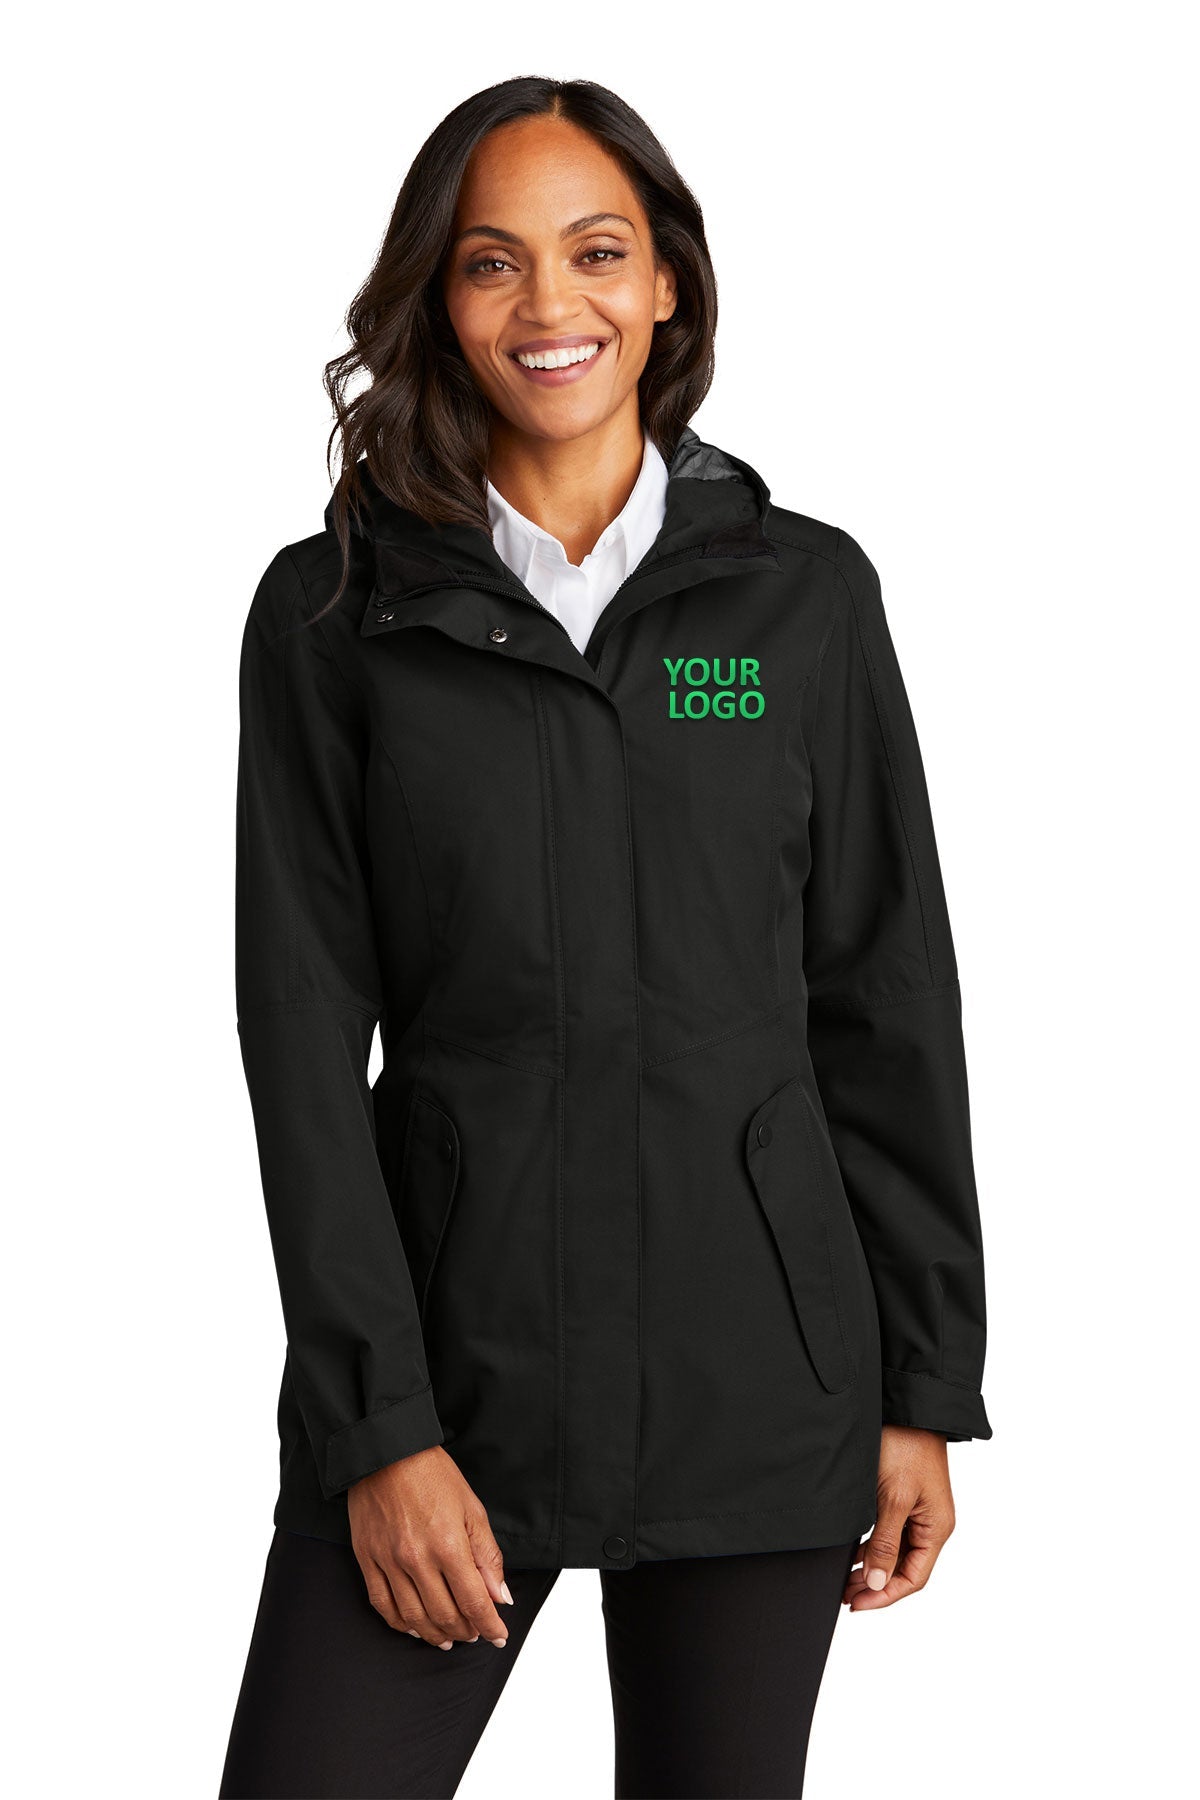 Port Authority Deep Black L900 company jackets with logo